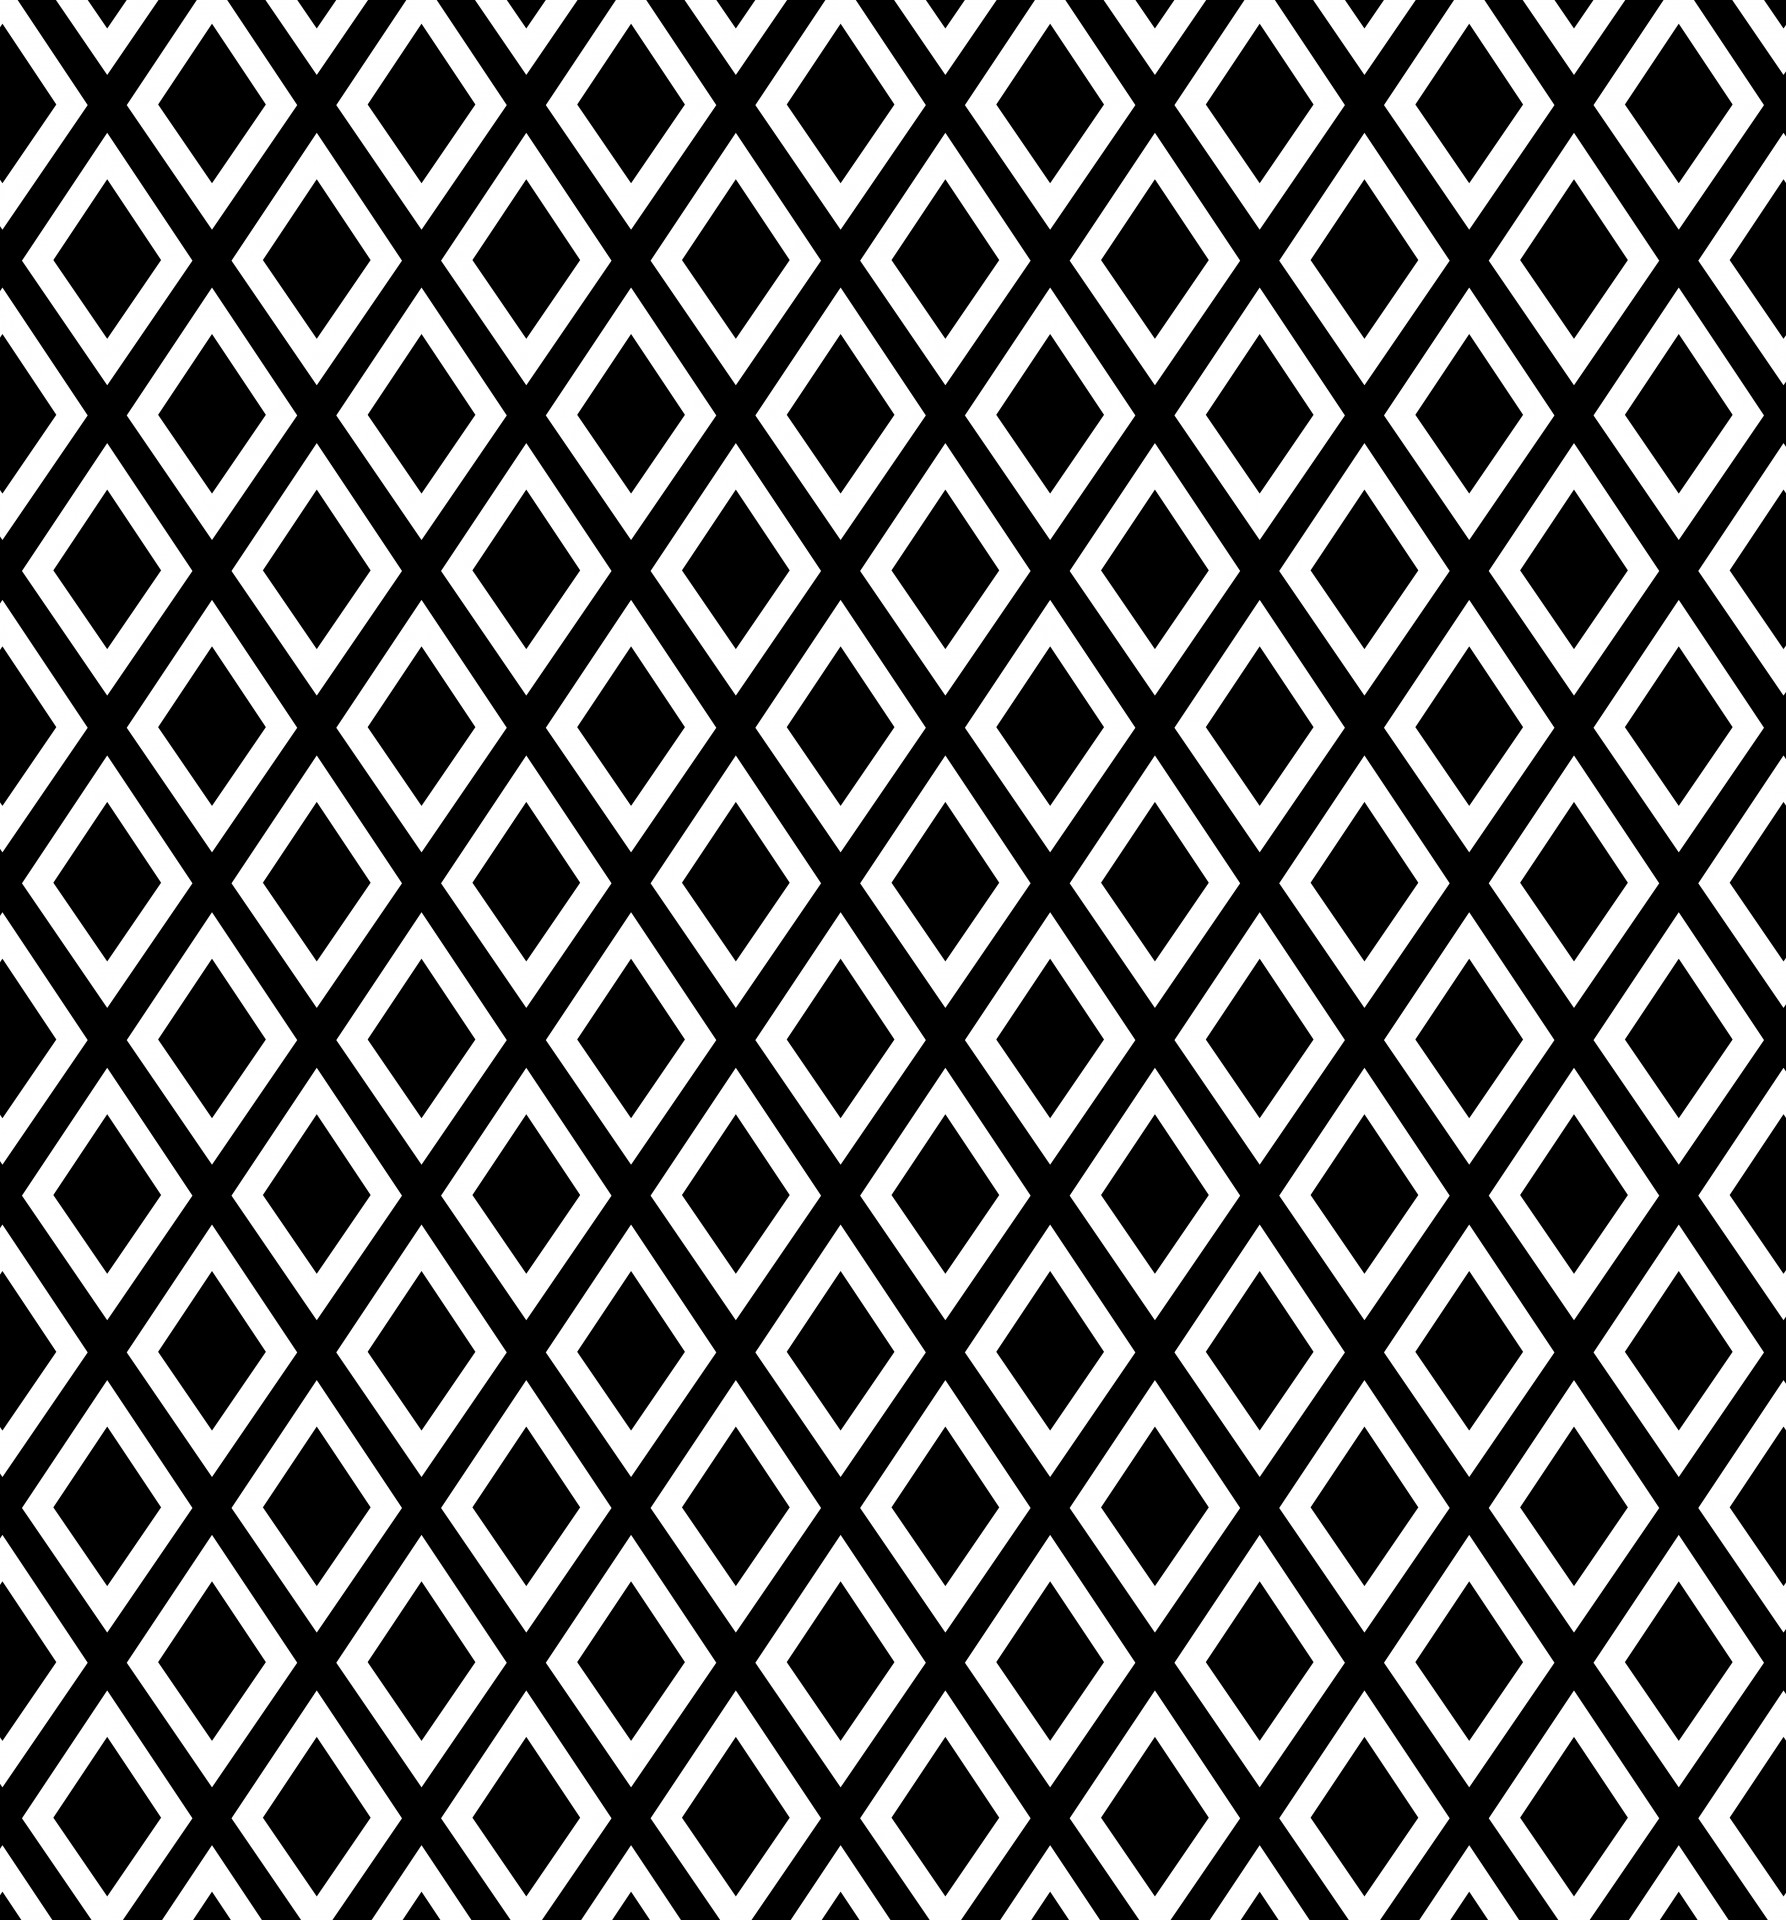 diamond-diamonds-black-white-pattern-free-image-from-needpix